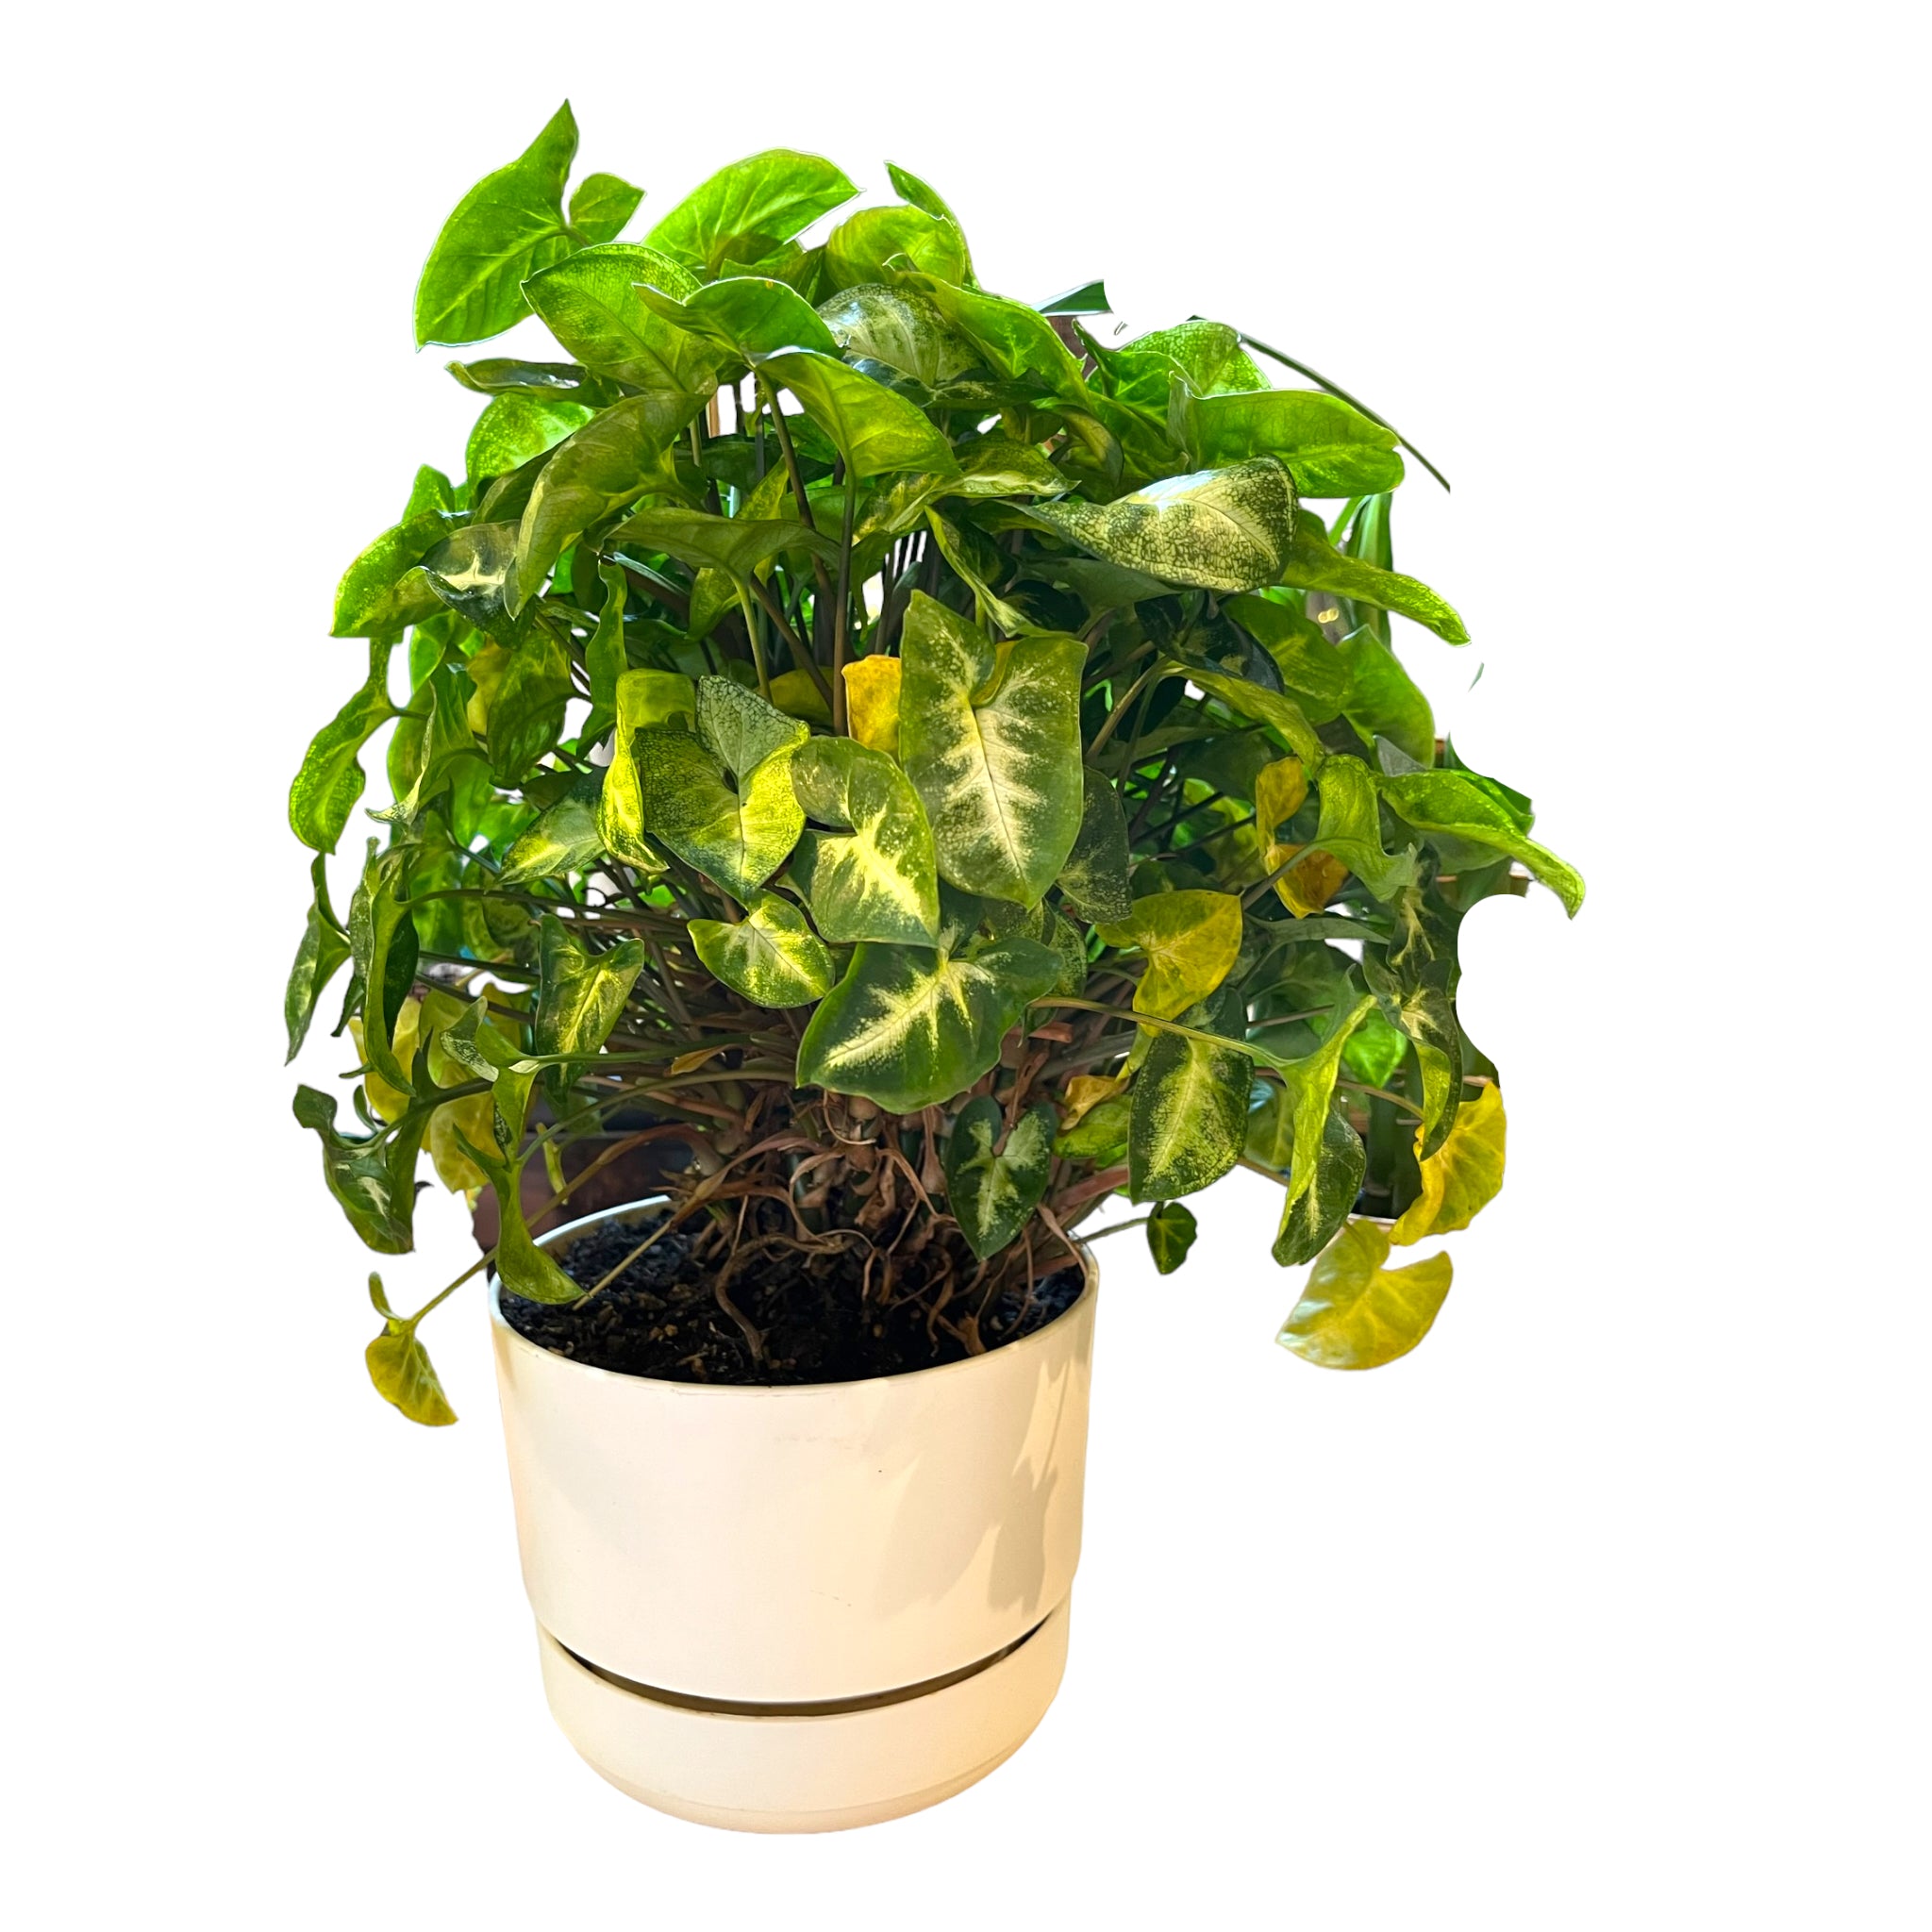 Syngonium Podophyllum “Pixie” Plant